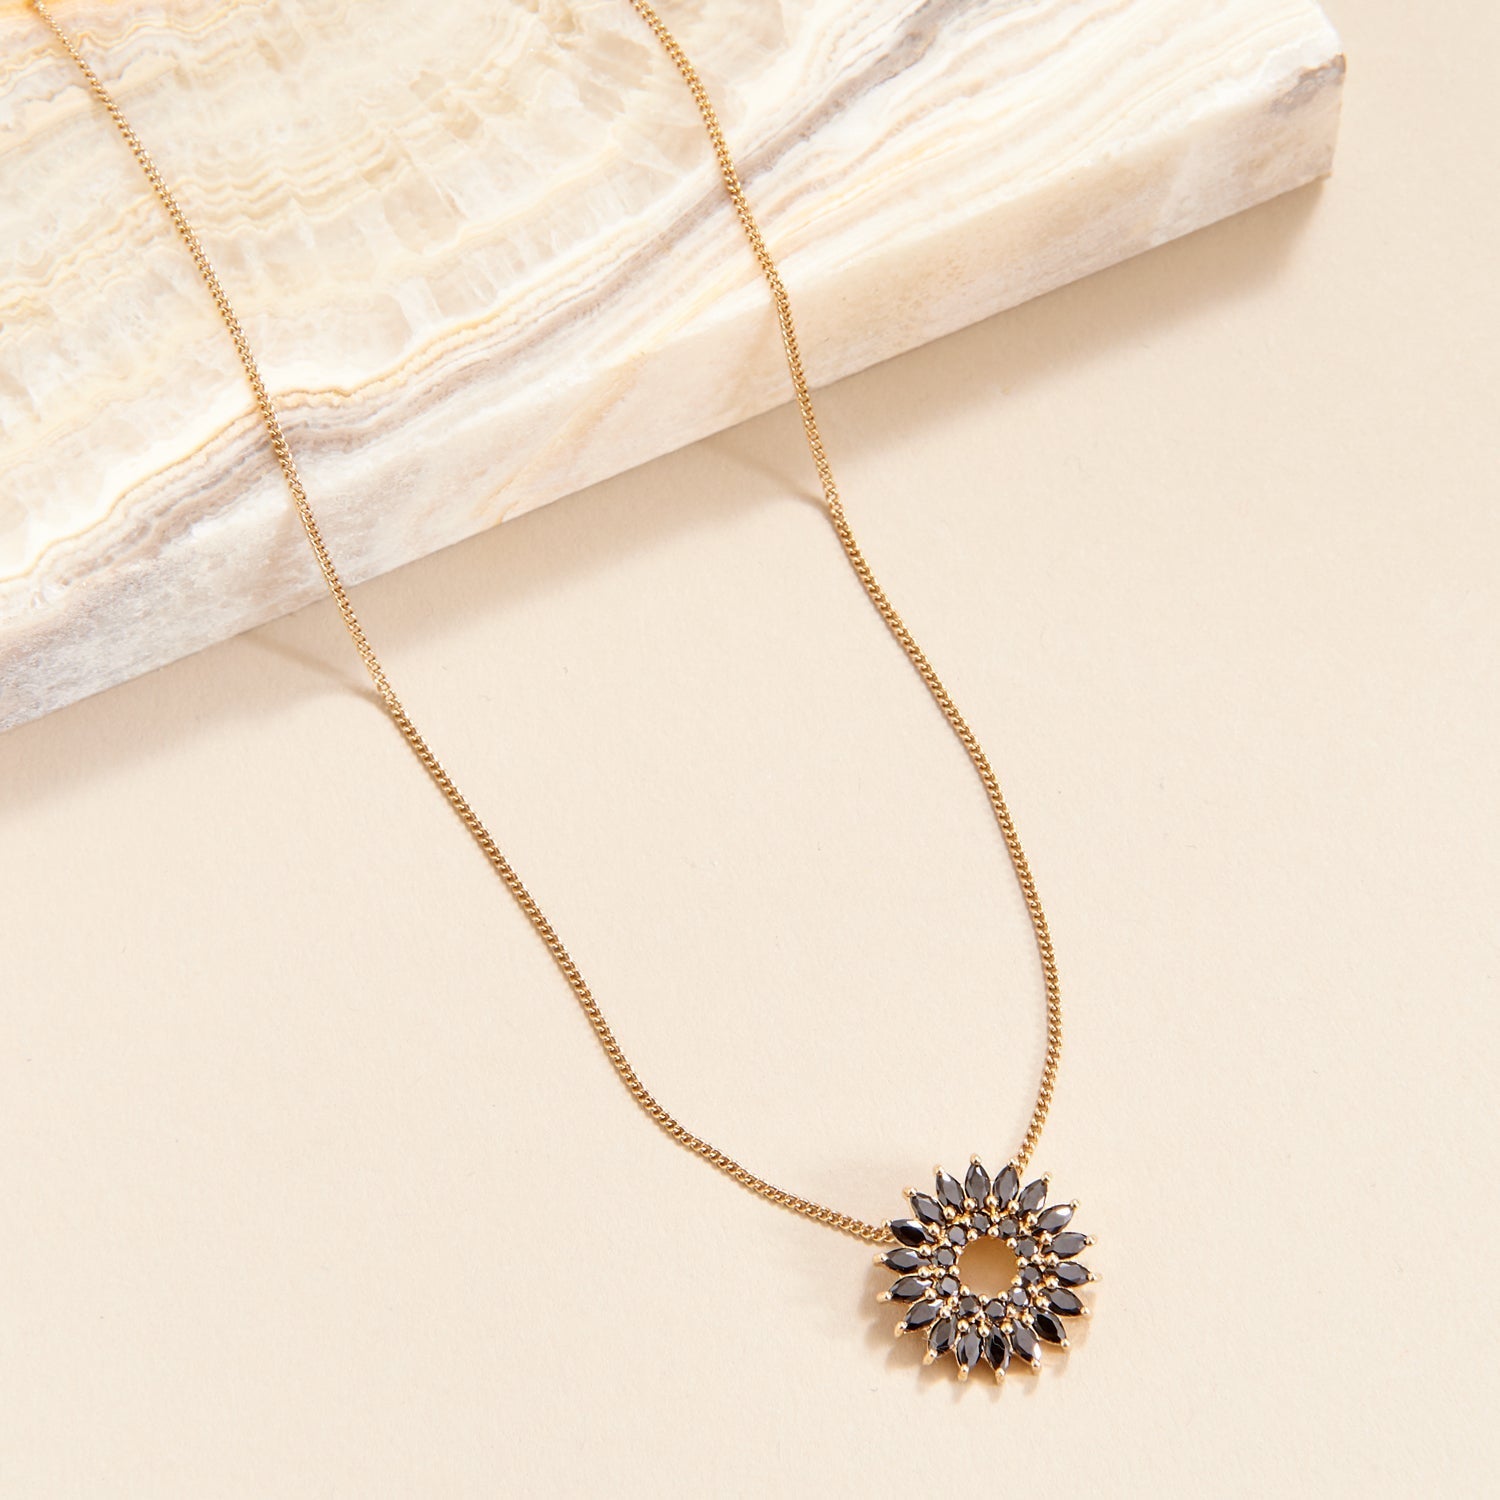 Crystal Burst Necklace Black Gold by Mignonne Gavigan